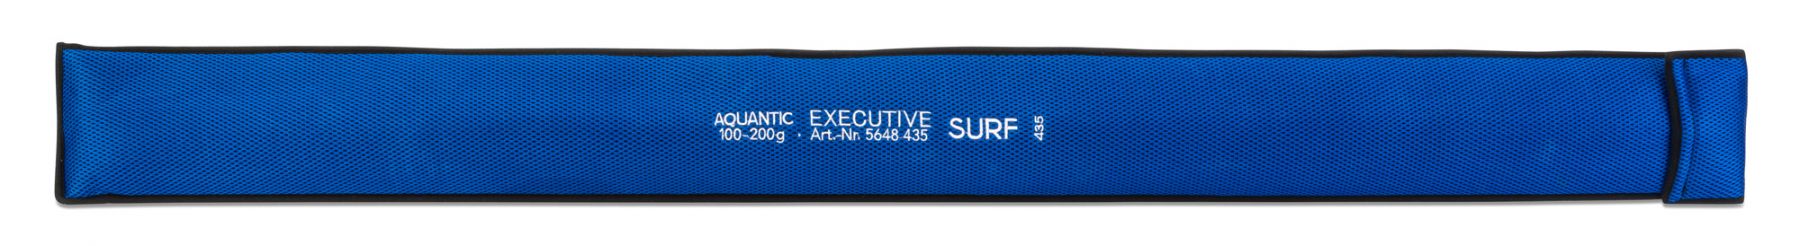 Aquantic Executive Surf Strandhengel 4.35m (100-200g) (3-Delig)